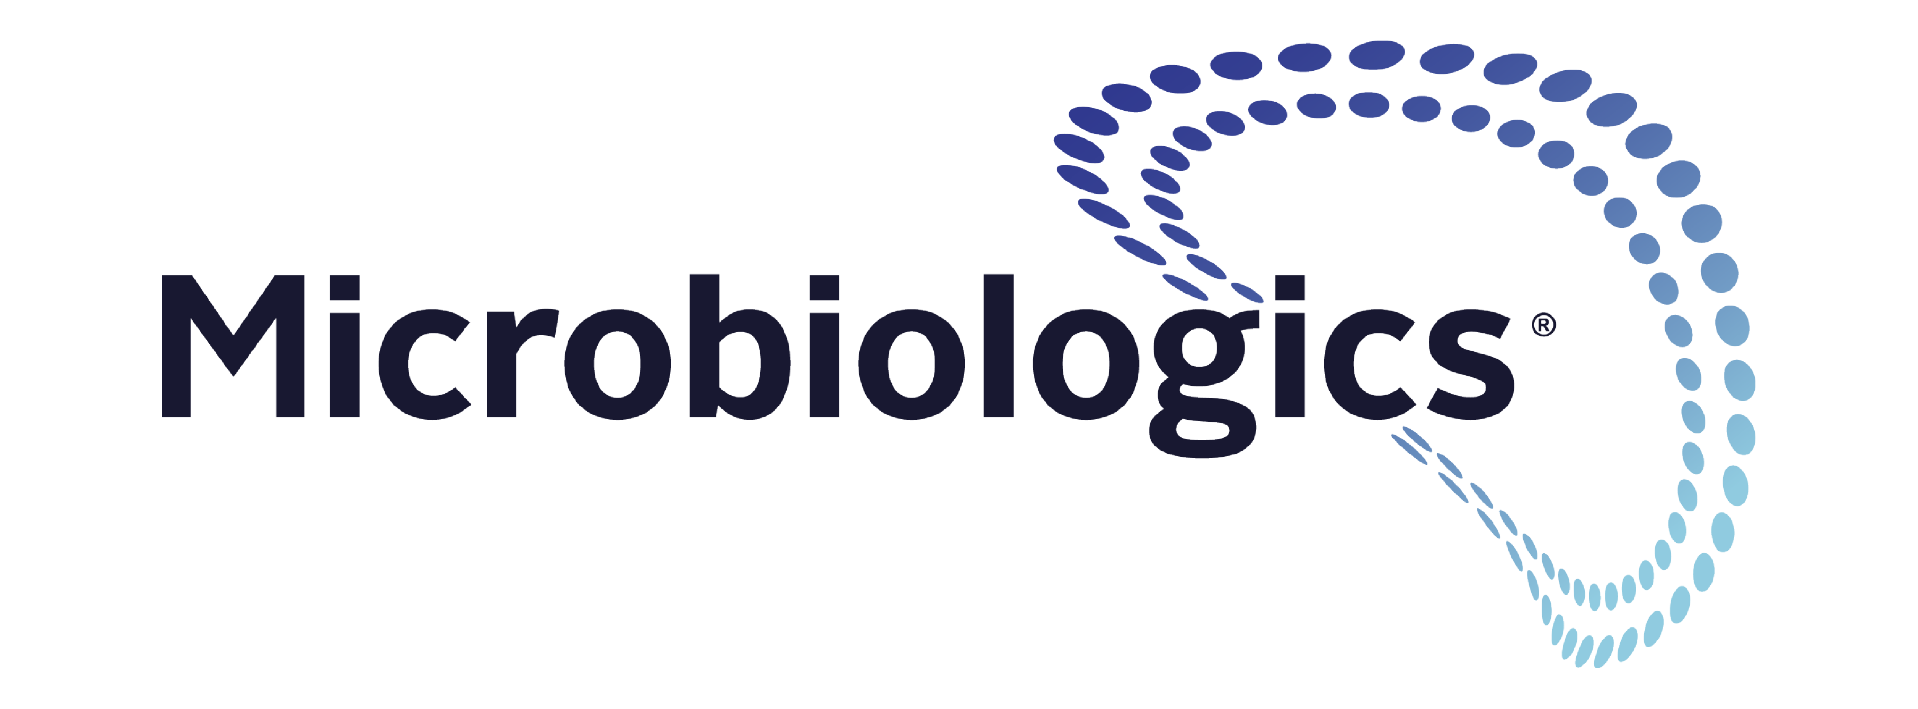 Microbiologics (MBL)